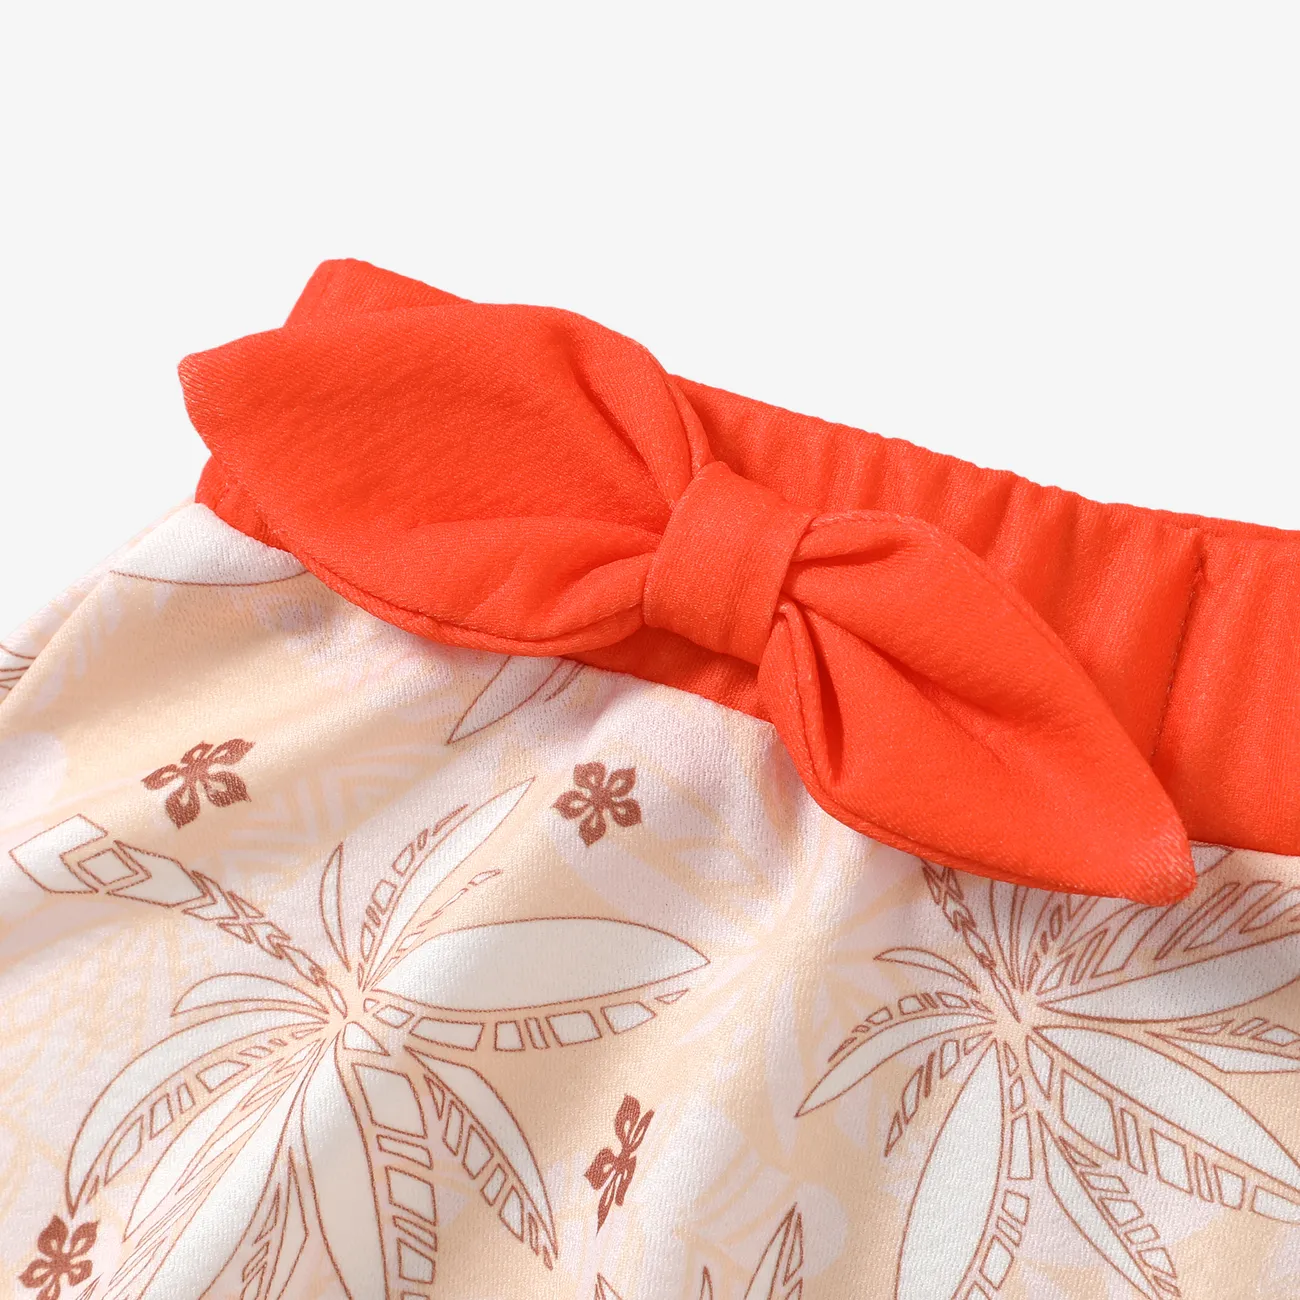 Disney Princess 2件 IP 女 不規則下擺 休閒 棕櫚葉 套裝裙 橙紅色 big image 1